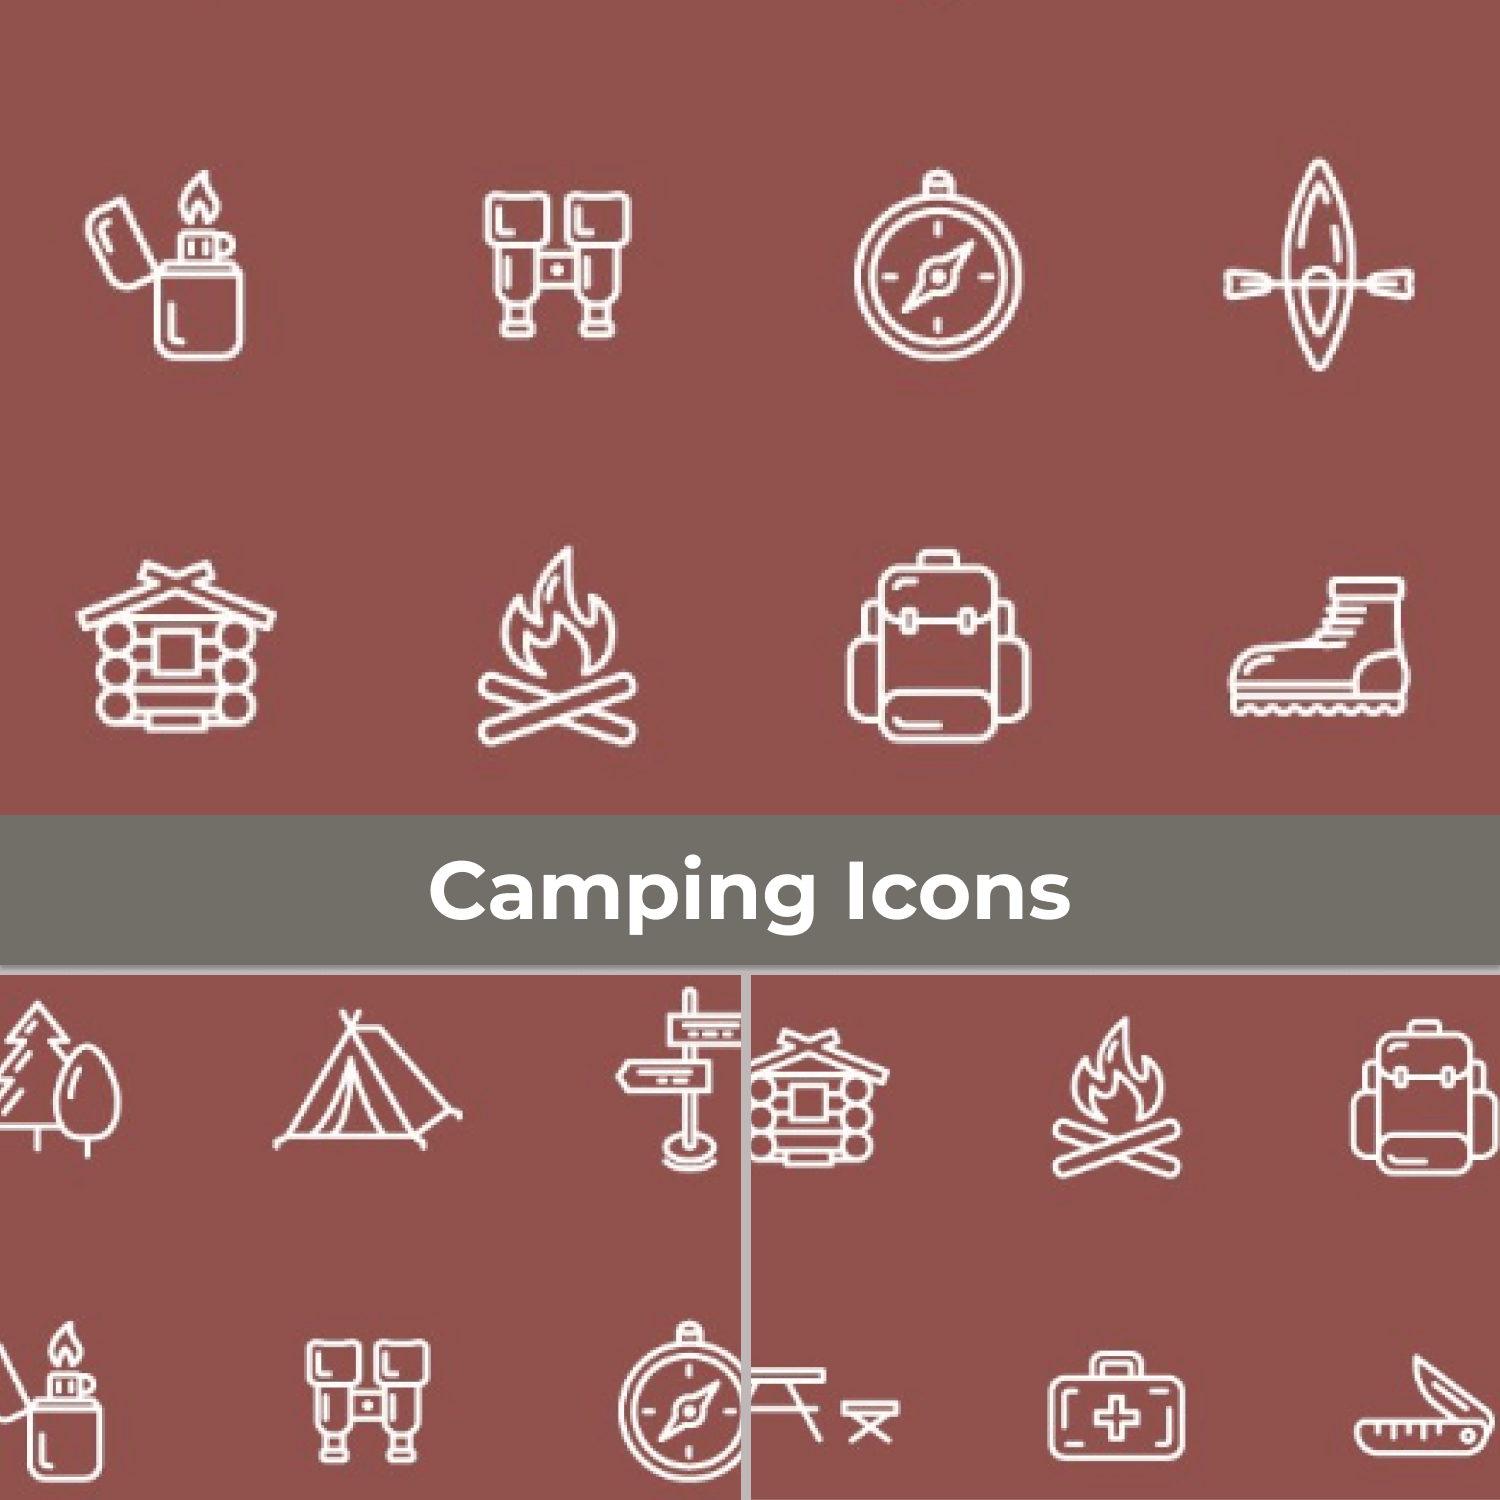 A various camping icons.